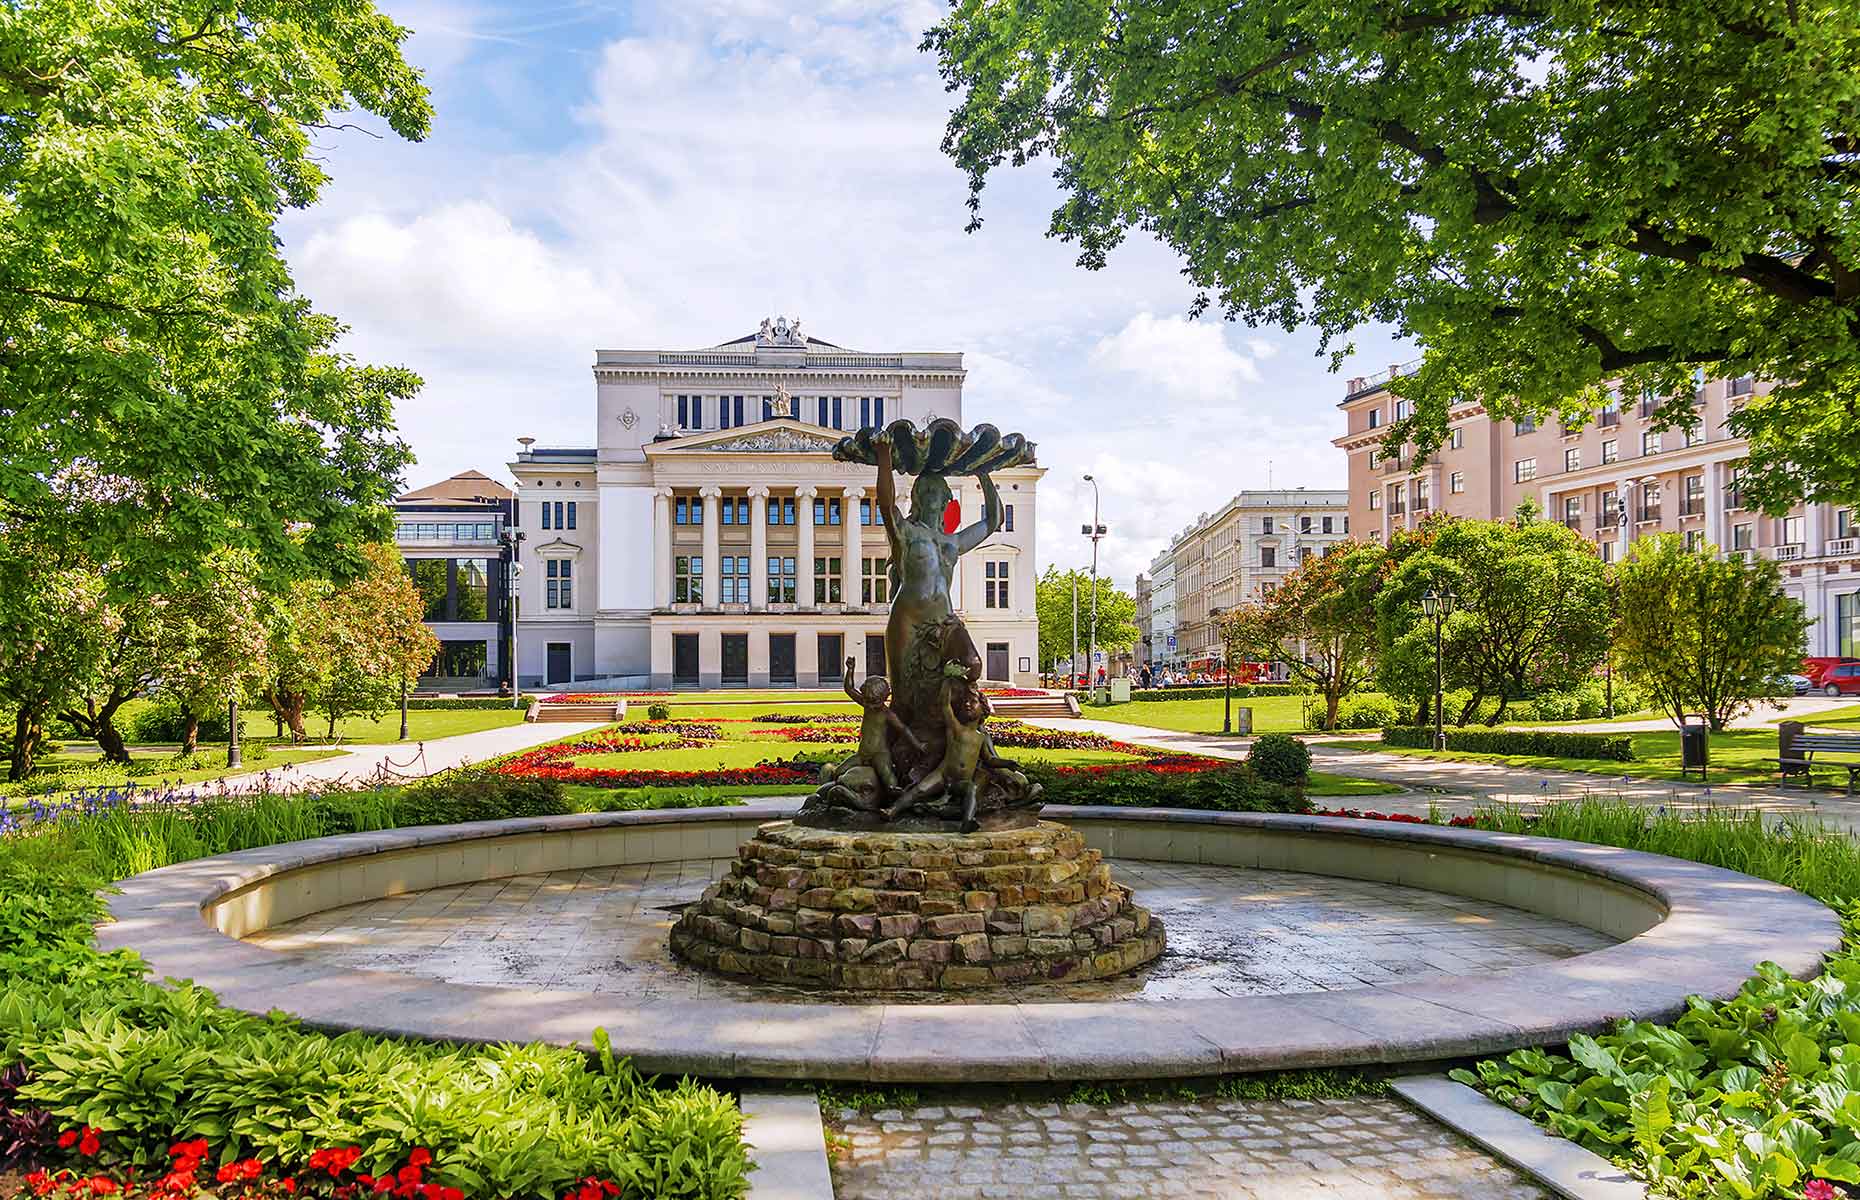 National Opera, Riga, Latvia (Image: dimbar76/Shutterstock)